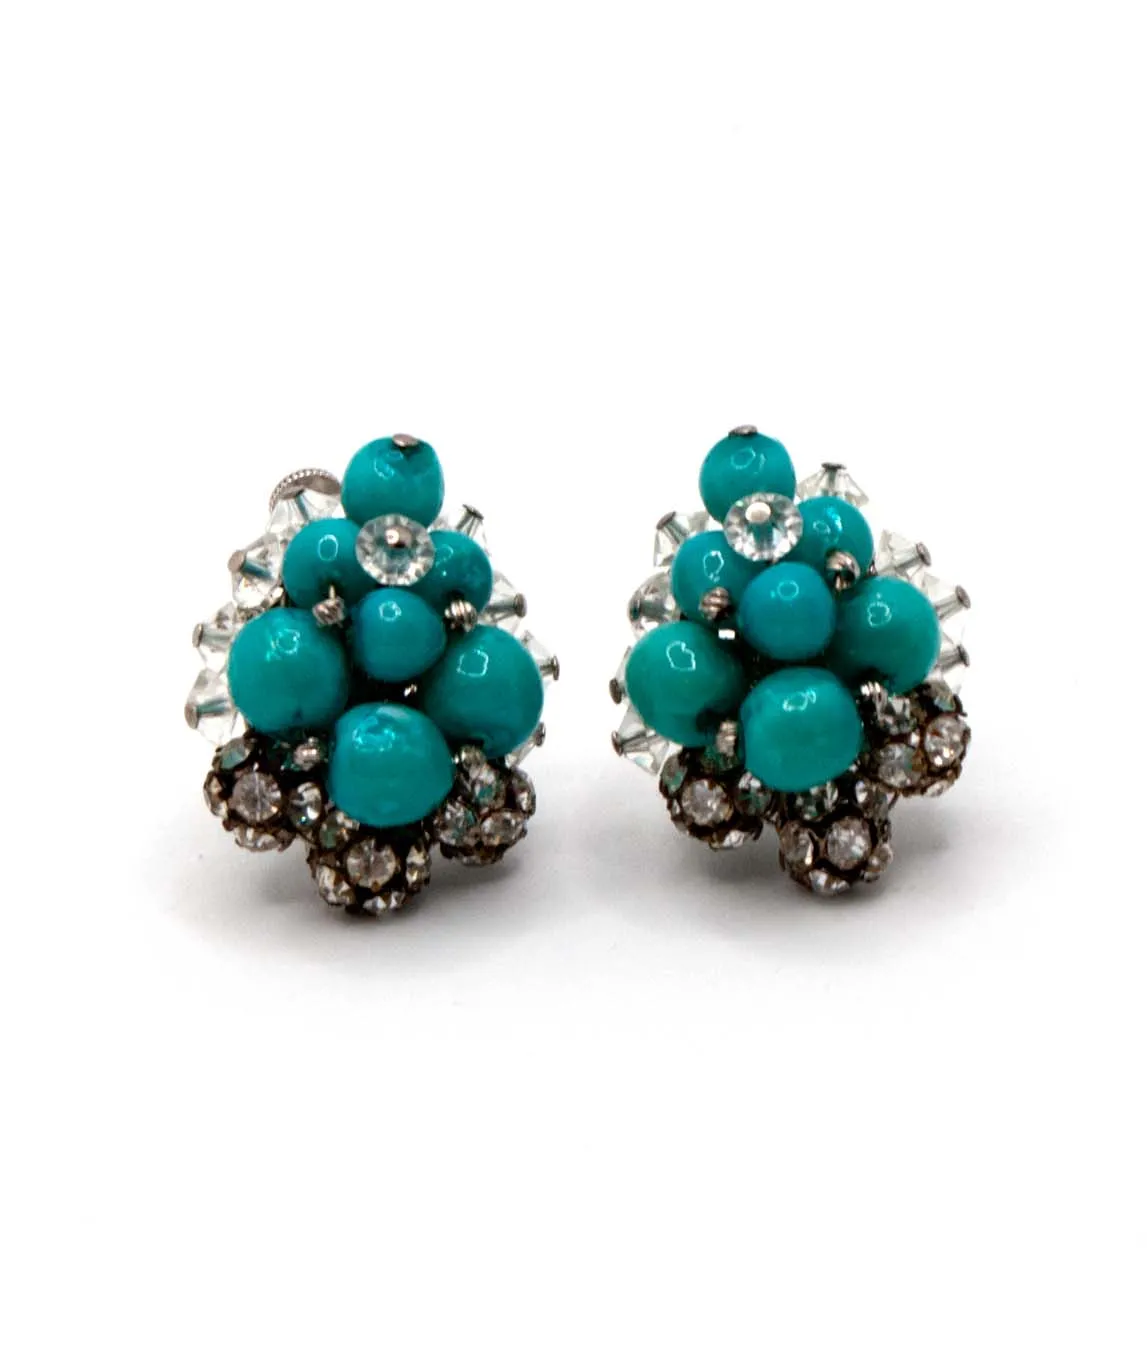 Vintage Vendôme turquoise earrings